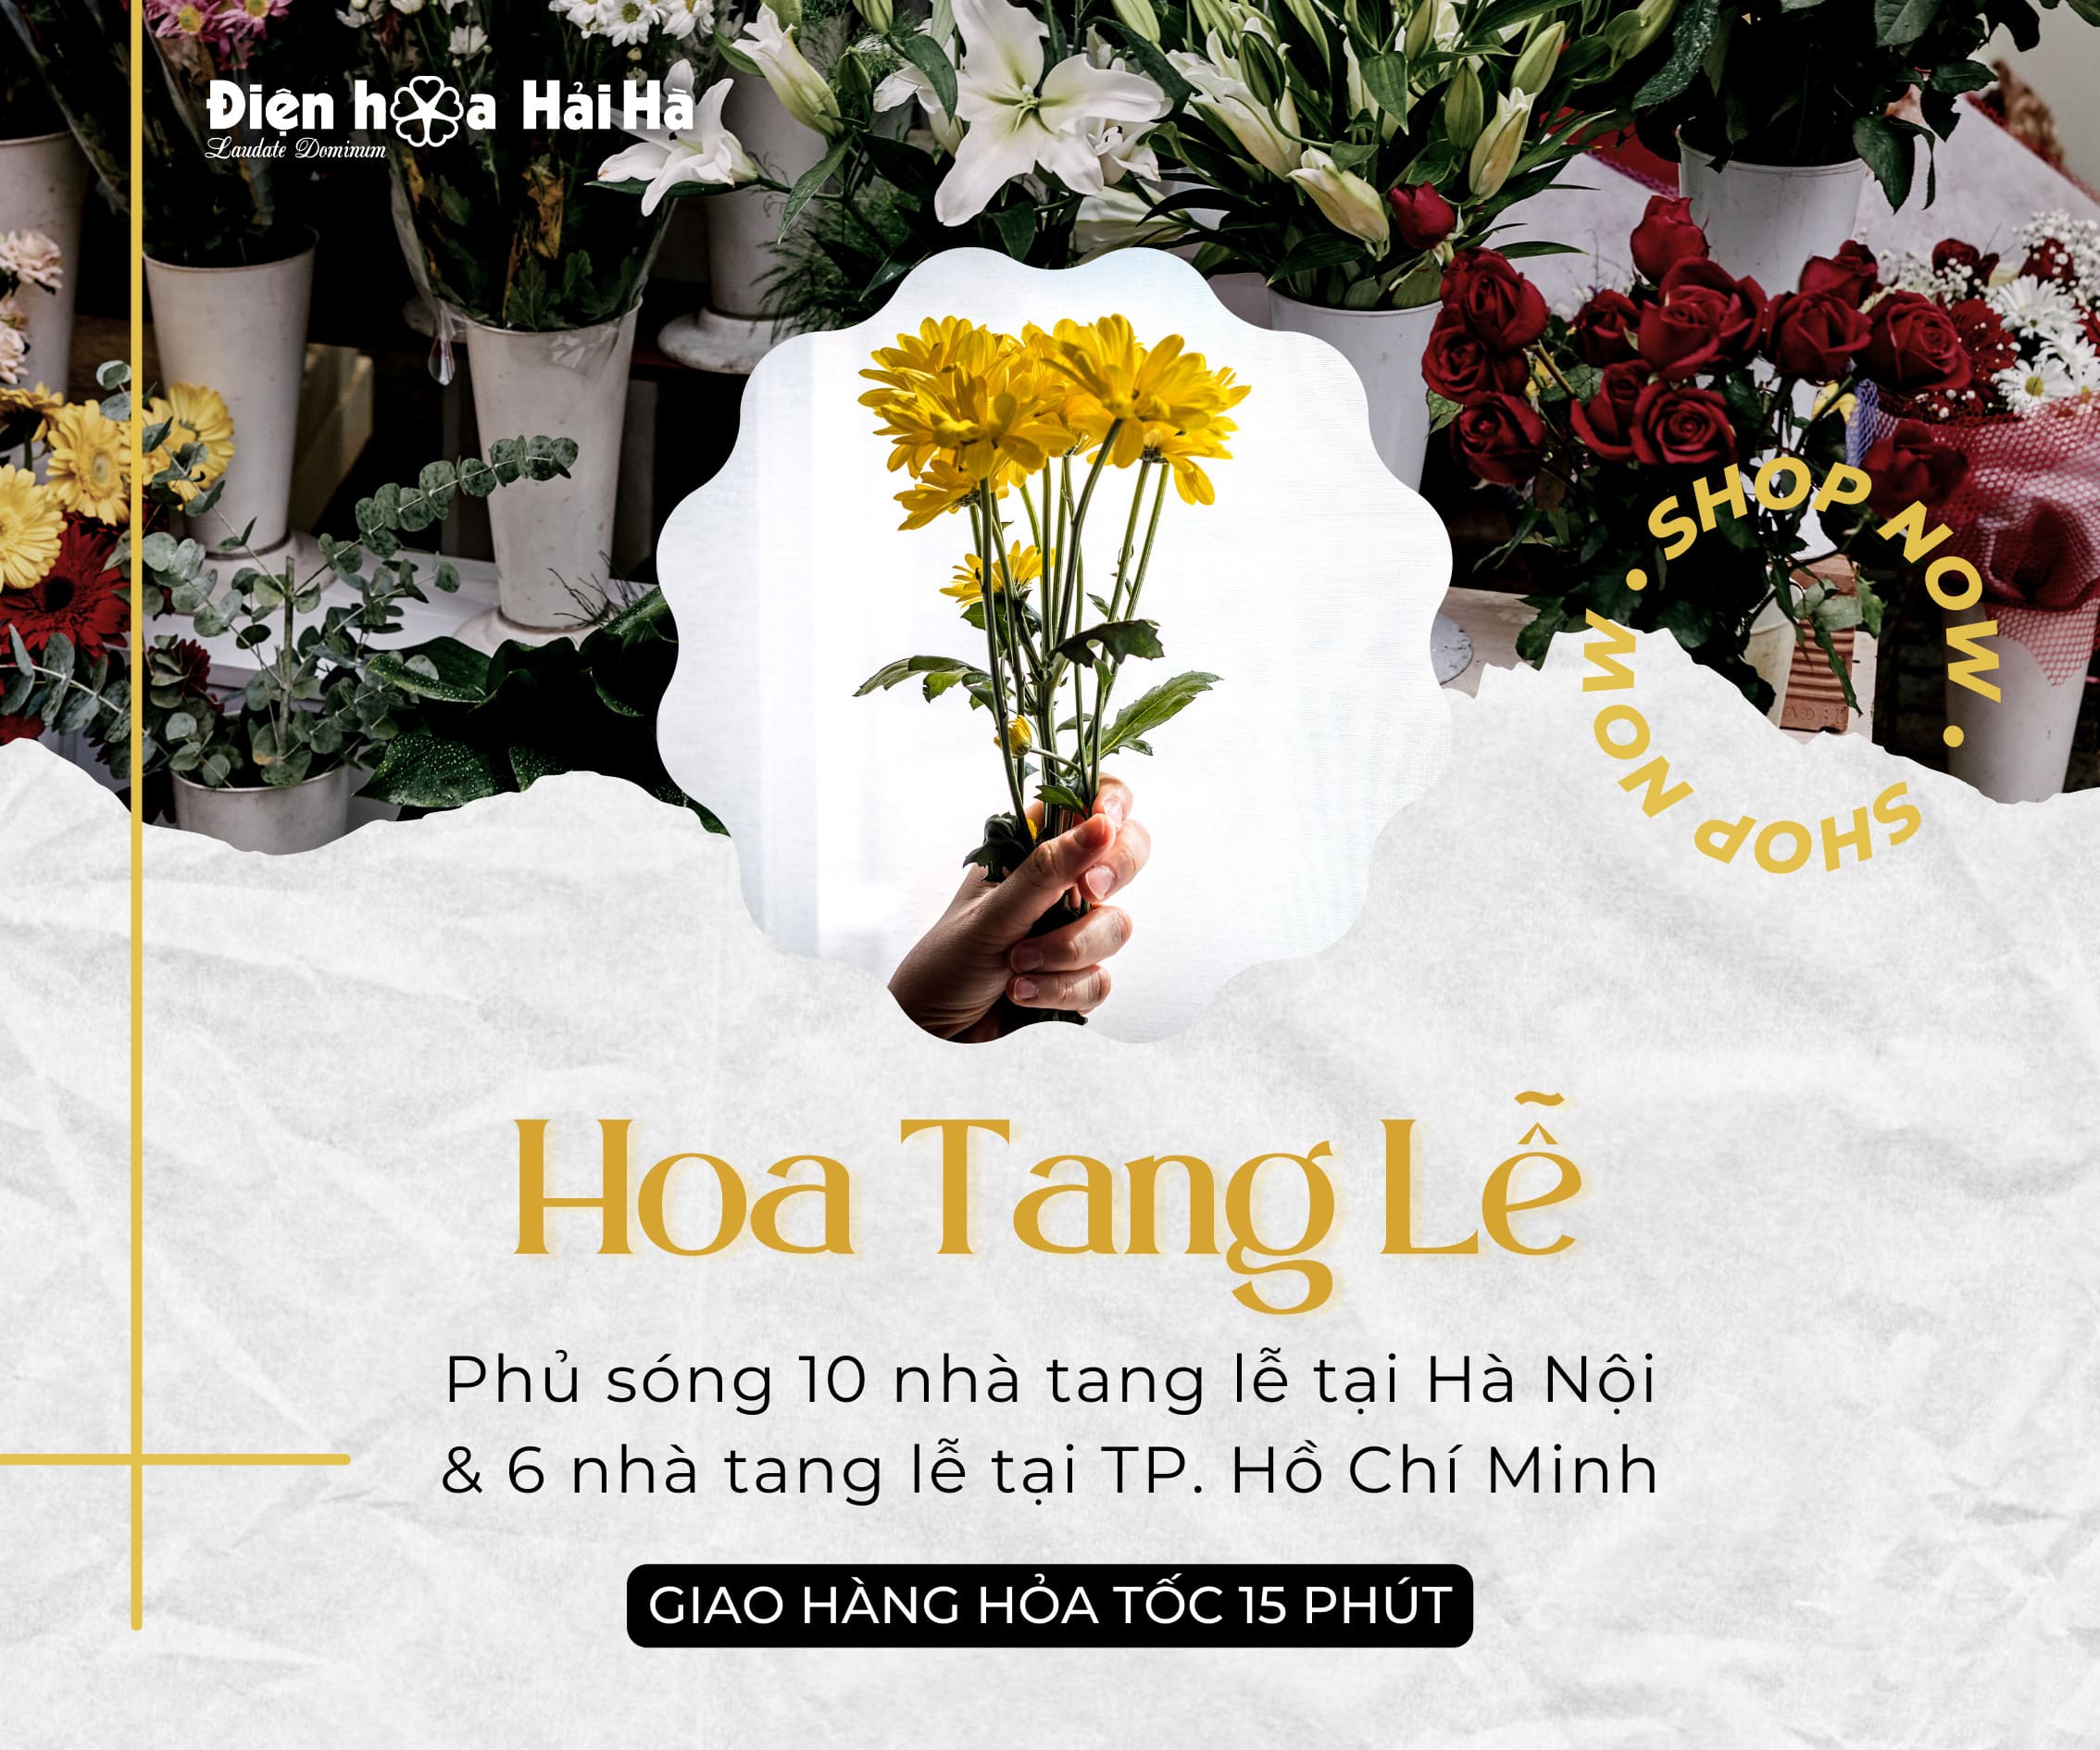 Banner hoa tang lễ dienhoahaiha.com mobile